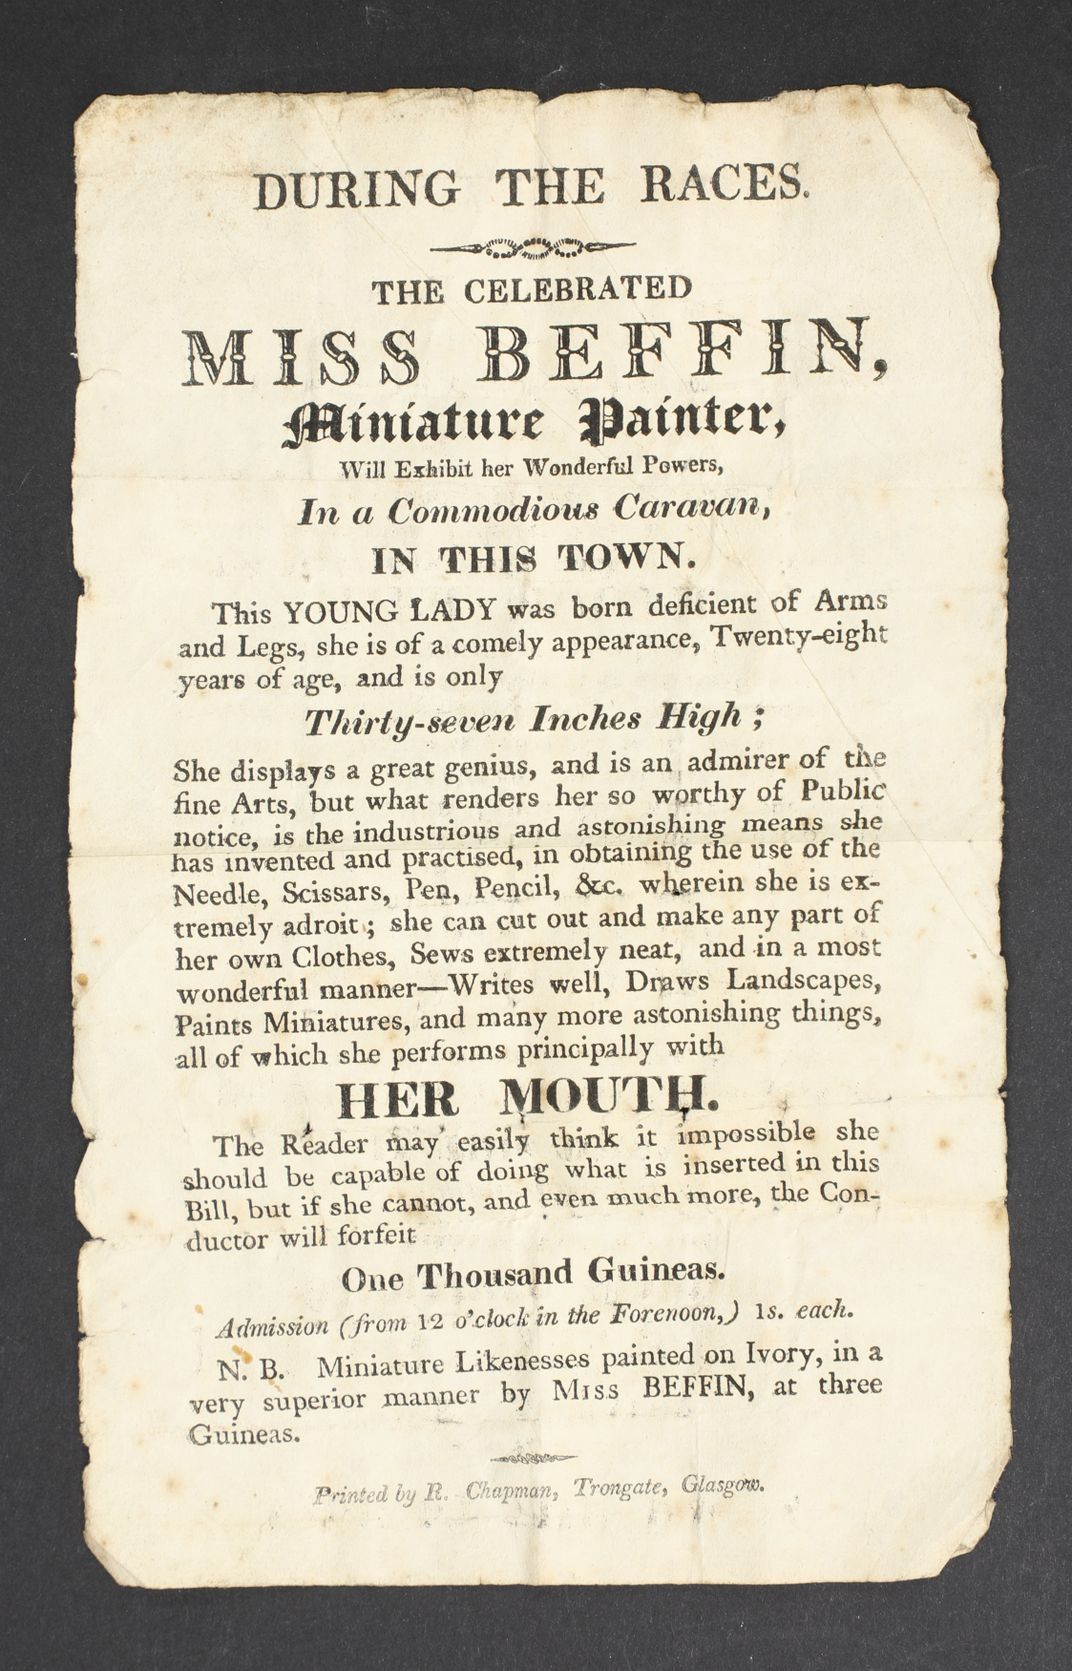 A flyer announcing Miss Biffin, Miniature Painter